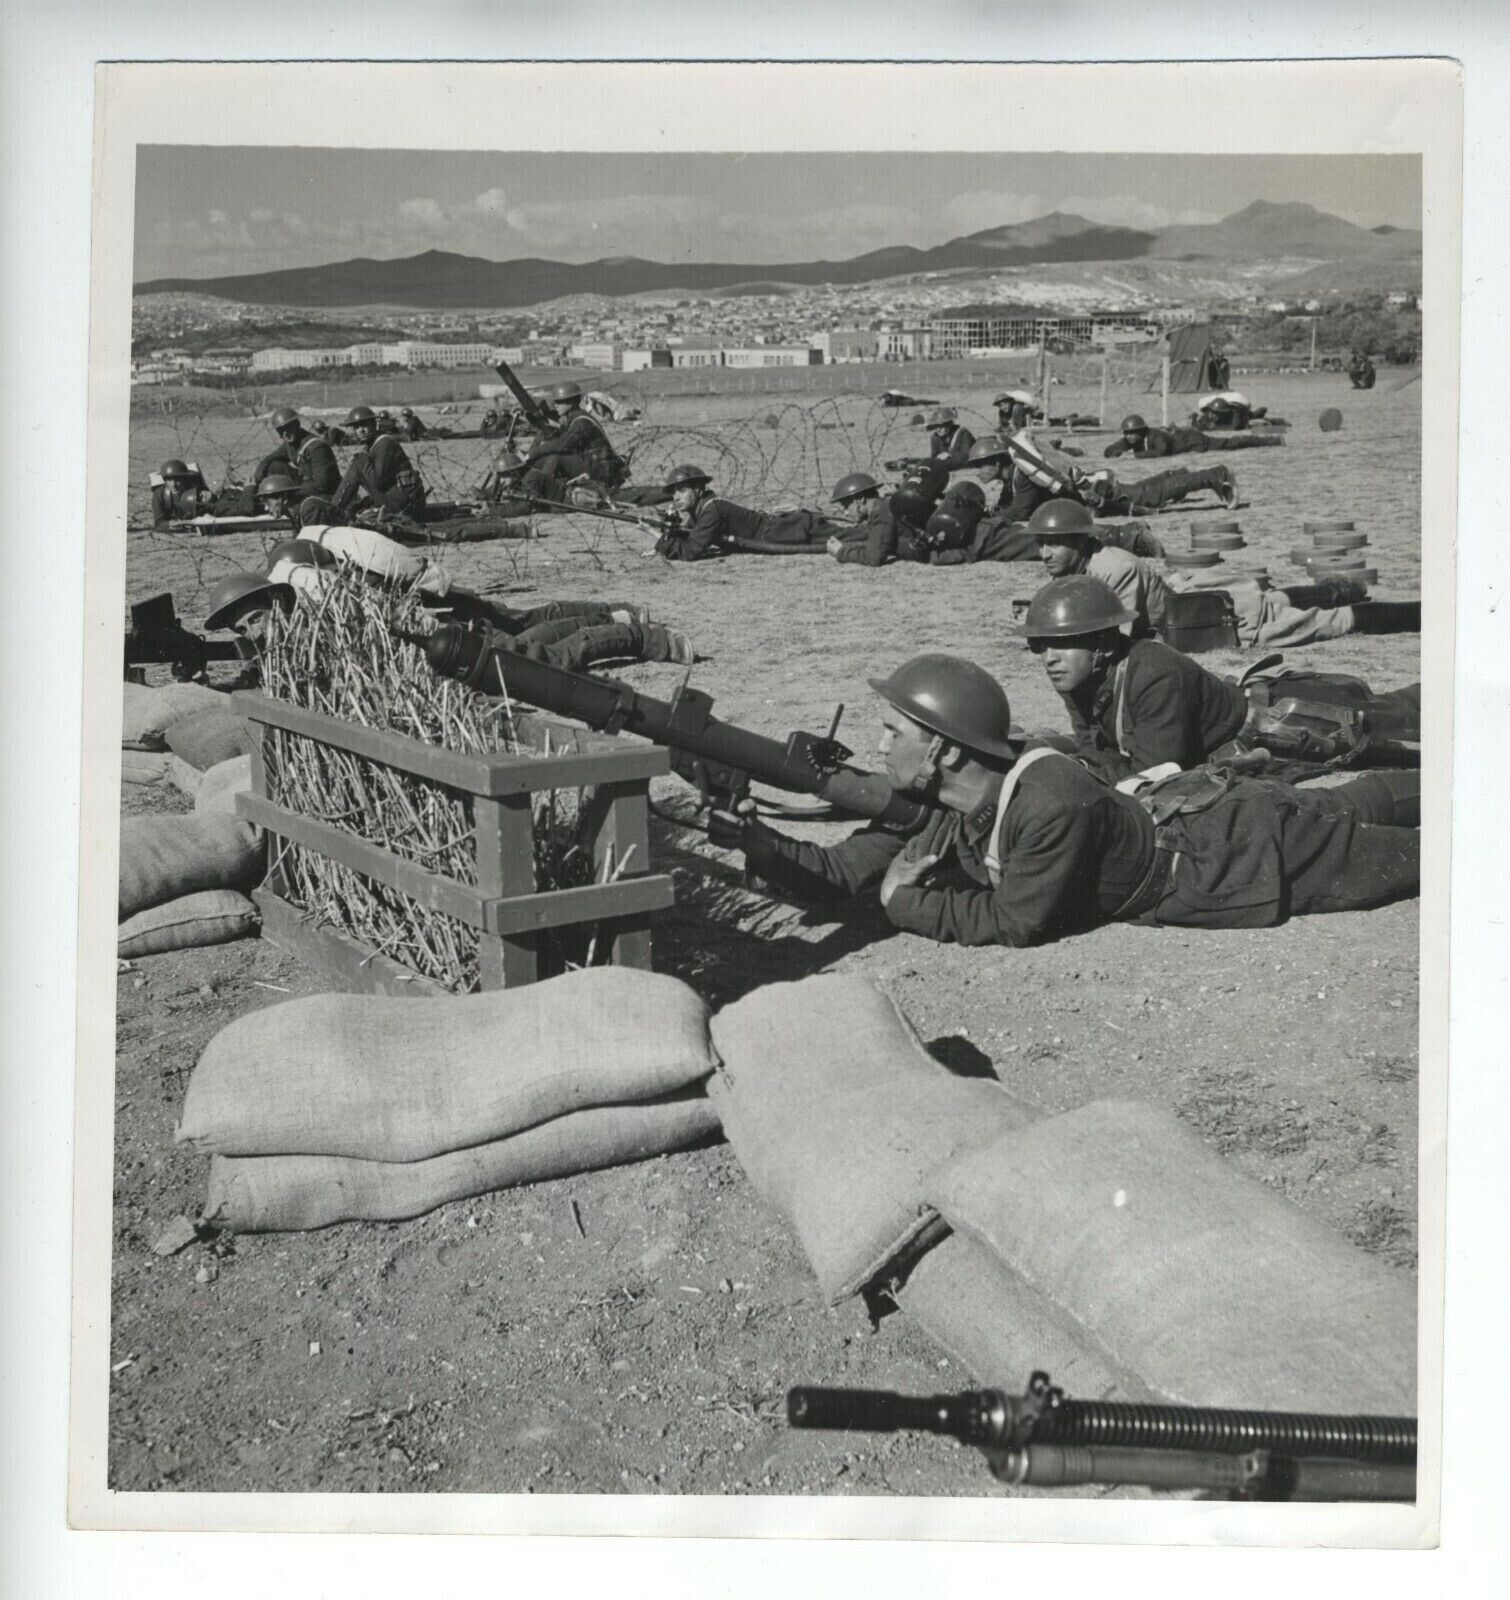 1947 ORIGINAL ANKARA TURKEY HARP OKULU ARMY WEST POINT PHOTO VINTAGE MILITARY